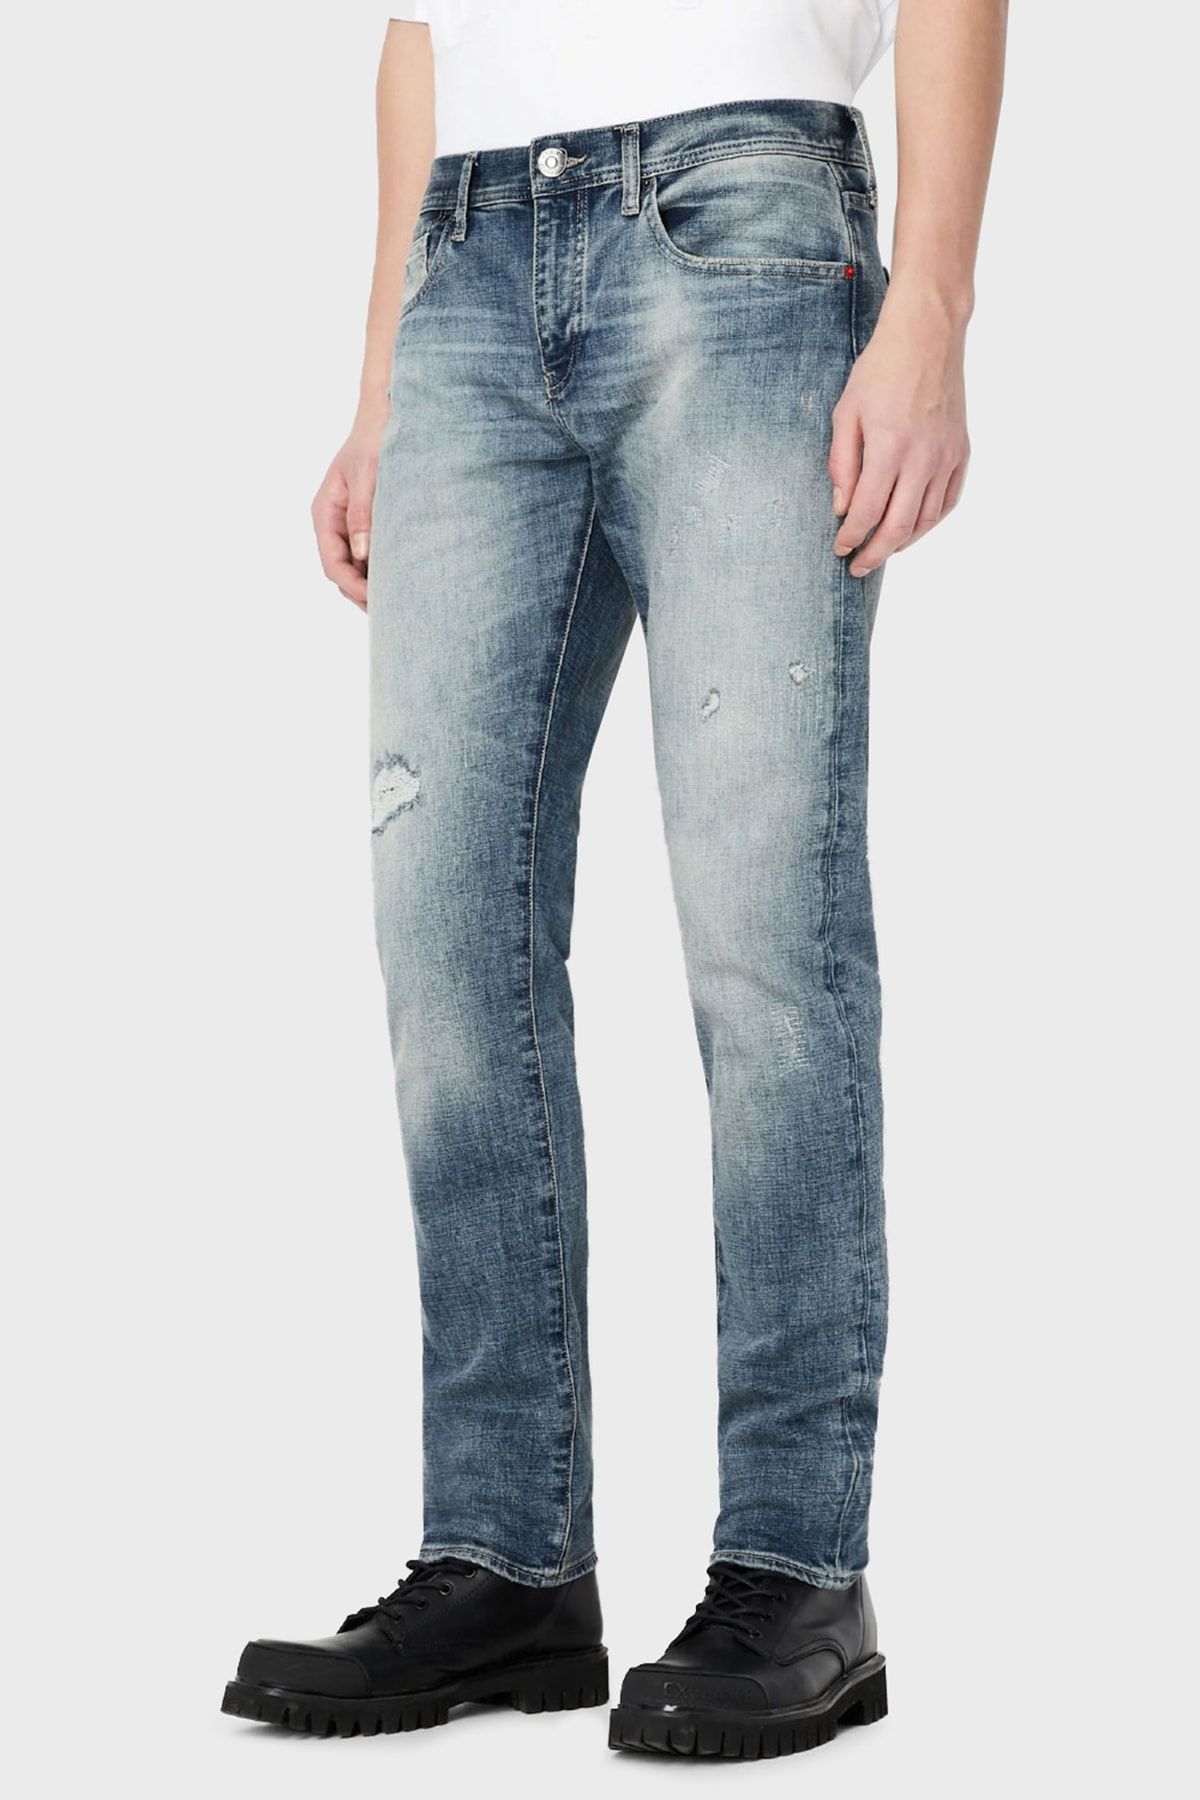 Armani Exchange Pamuklu Yüksek Bel Boru Paça Slim Fit J10 Jeans Erkek Kot Pantolon 3rzj10 Z1ydz 1500